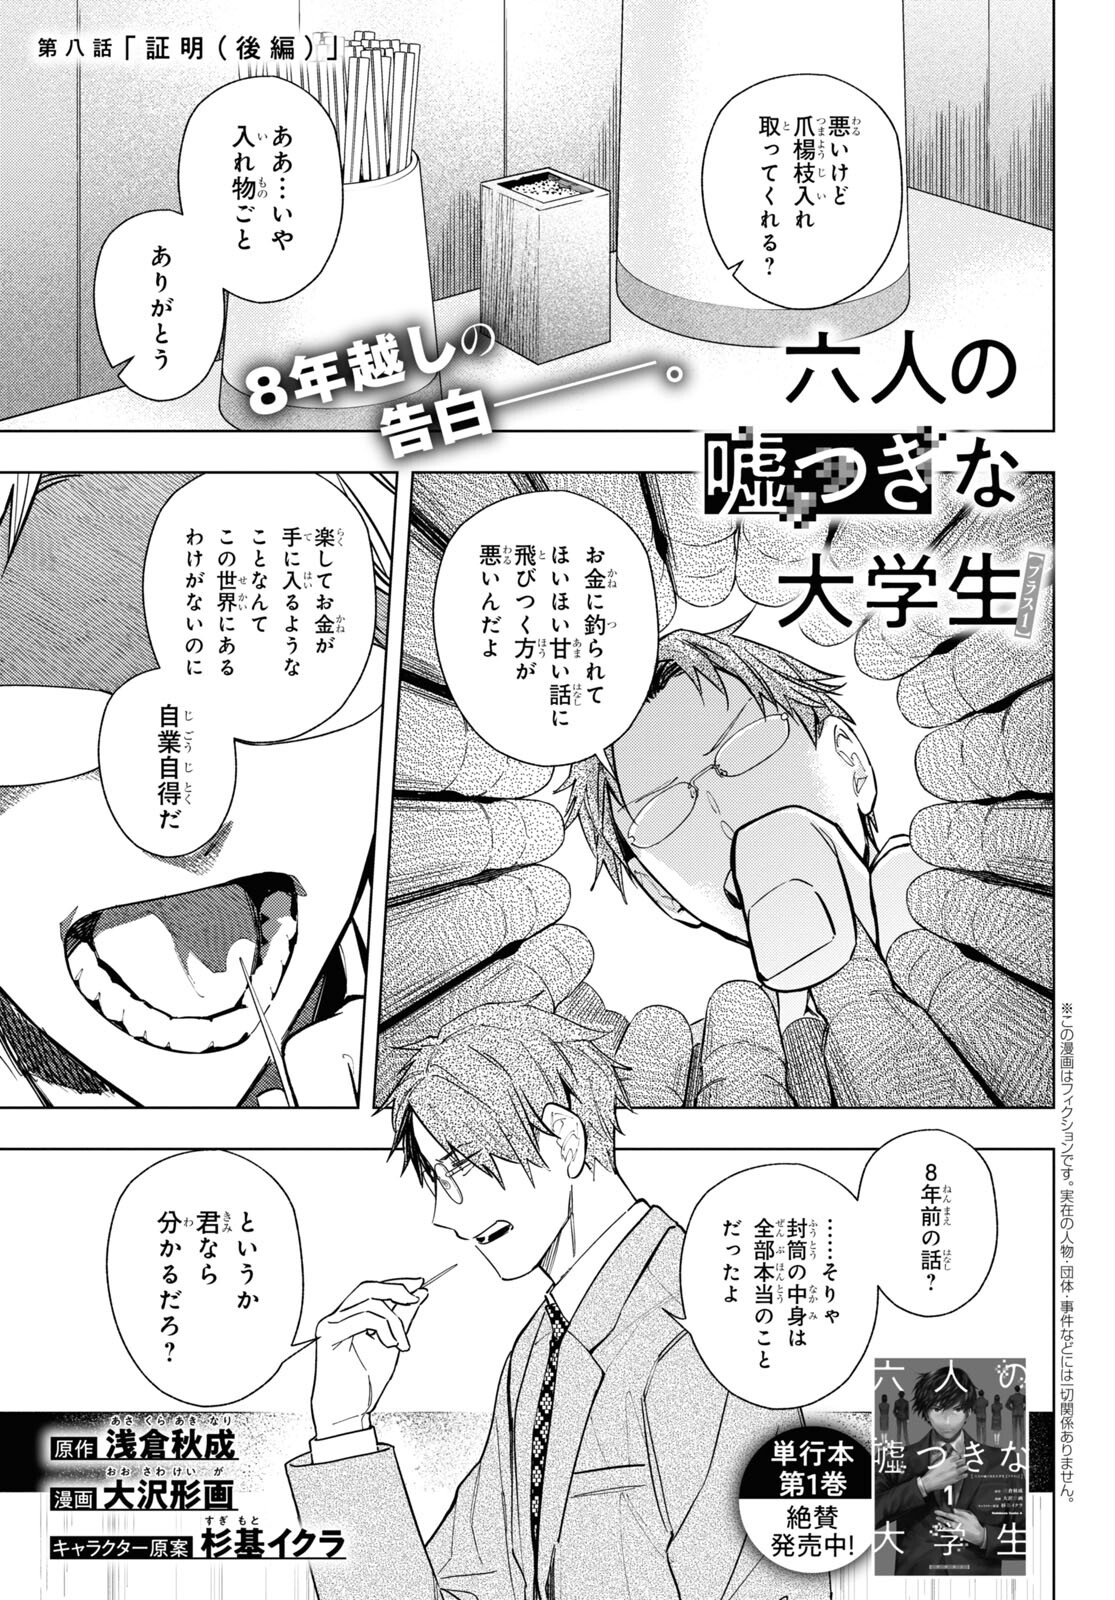 Rokunin no Usotsuki na Daigakusei (Plus 1) - Chapter 8.2 - Page 1